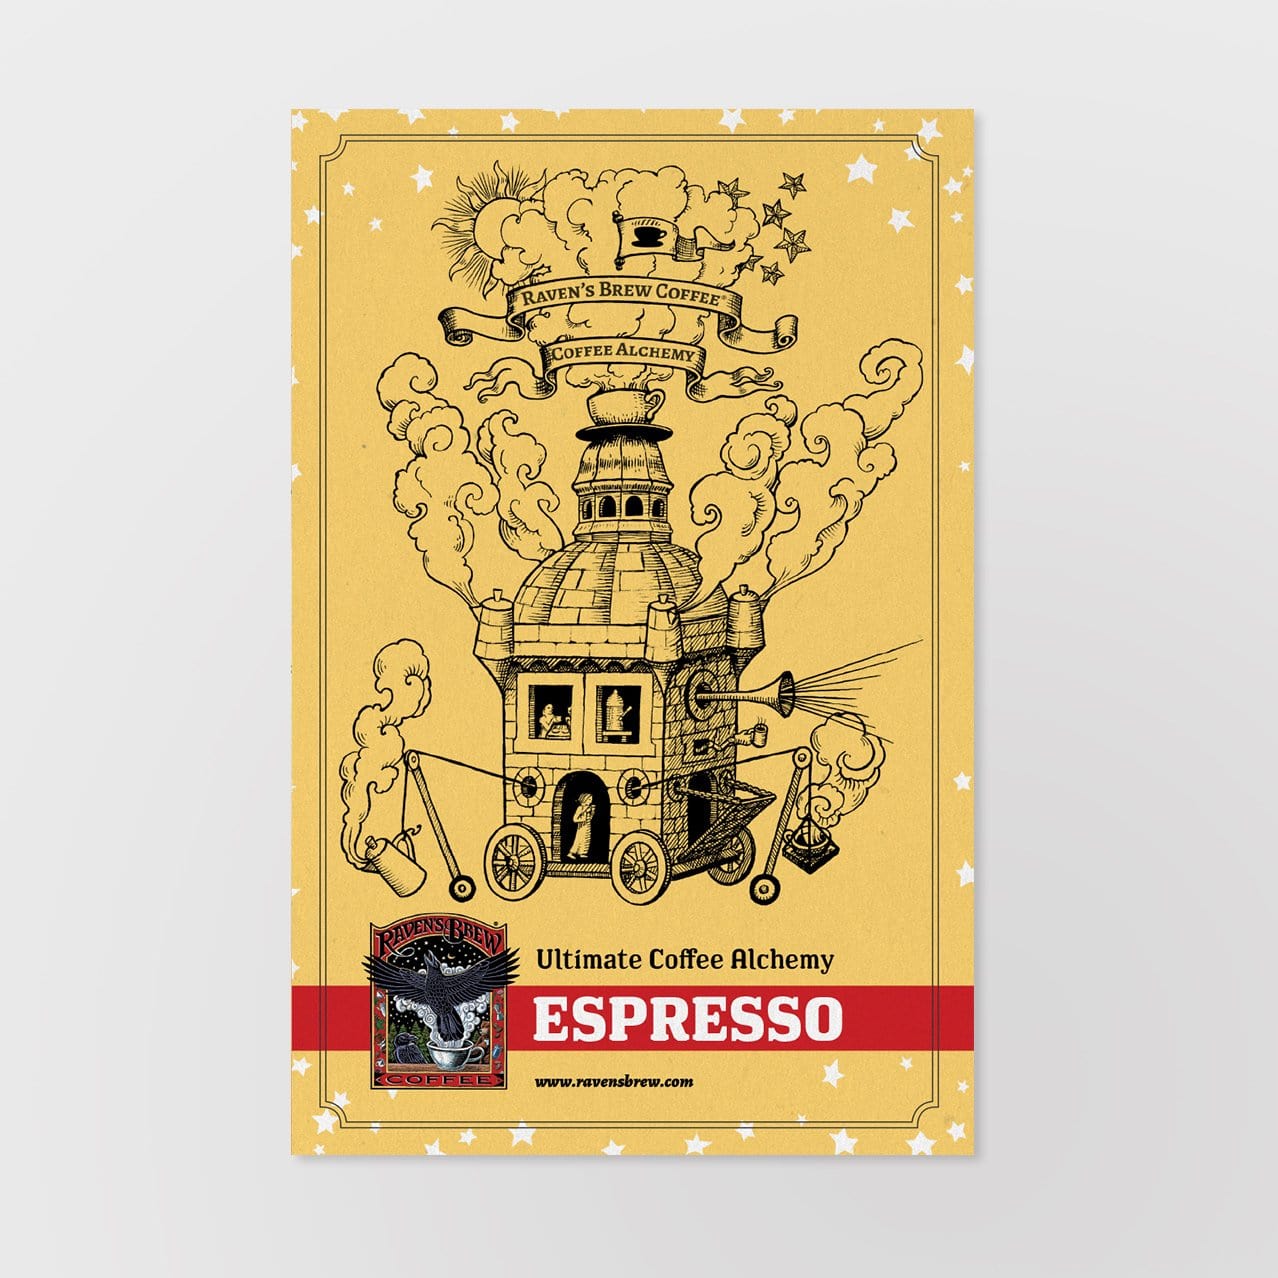 Espresso blend • Dead Reckoning - Corvus Coffee